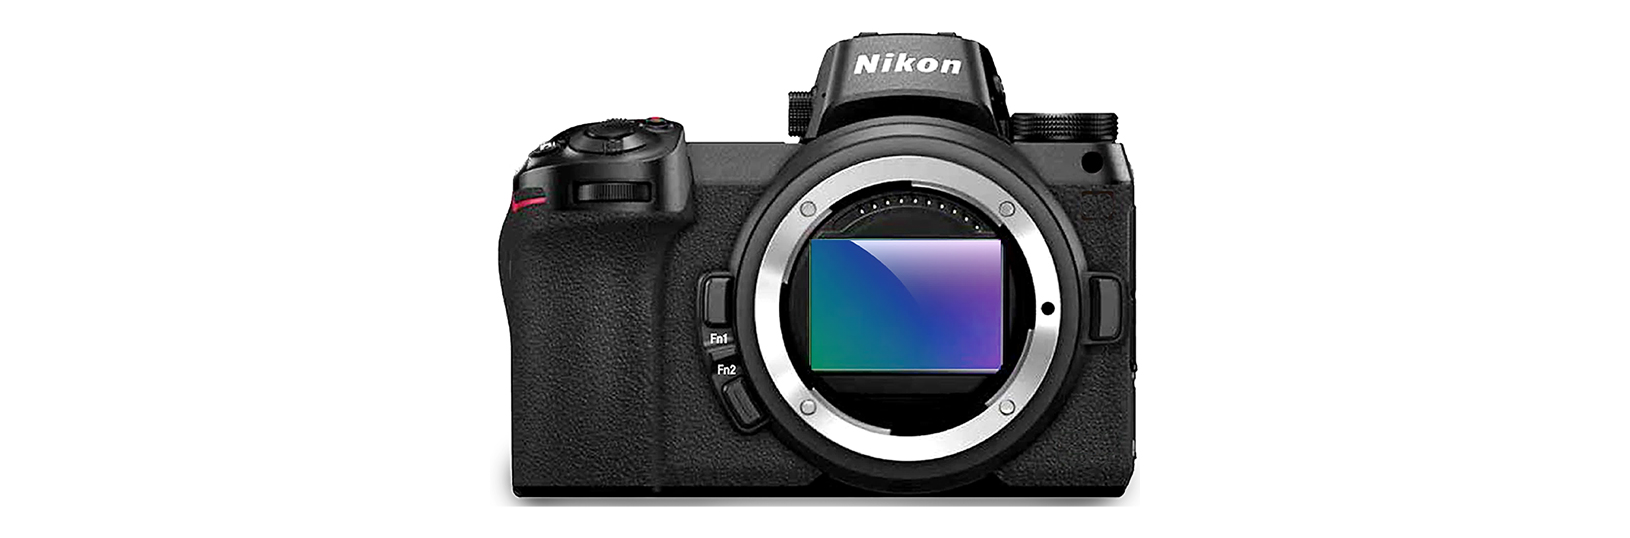 Nikon-Z6-mirrorless-camera2.jpg